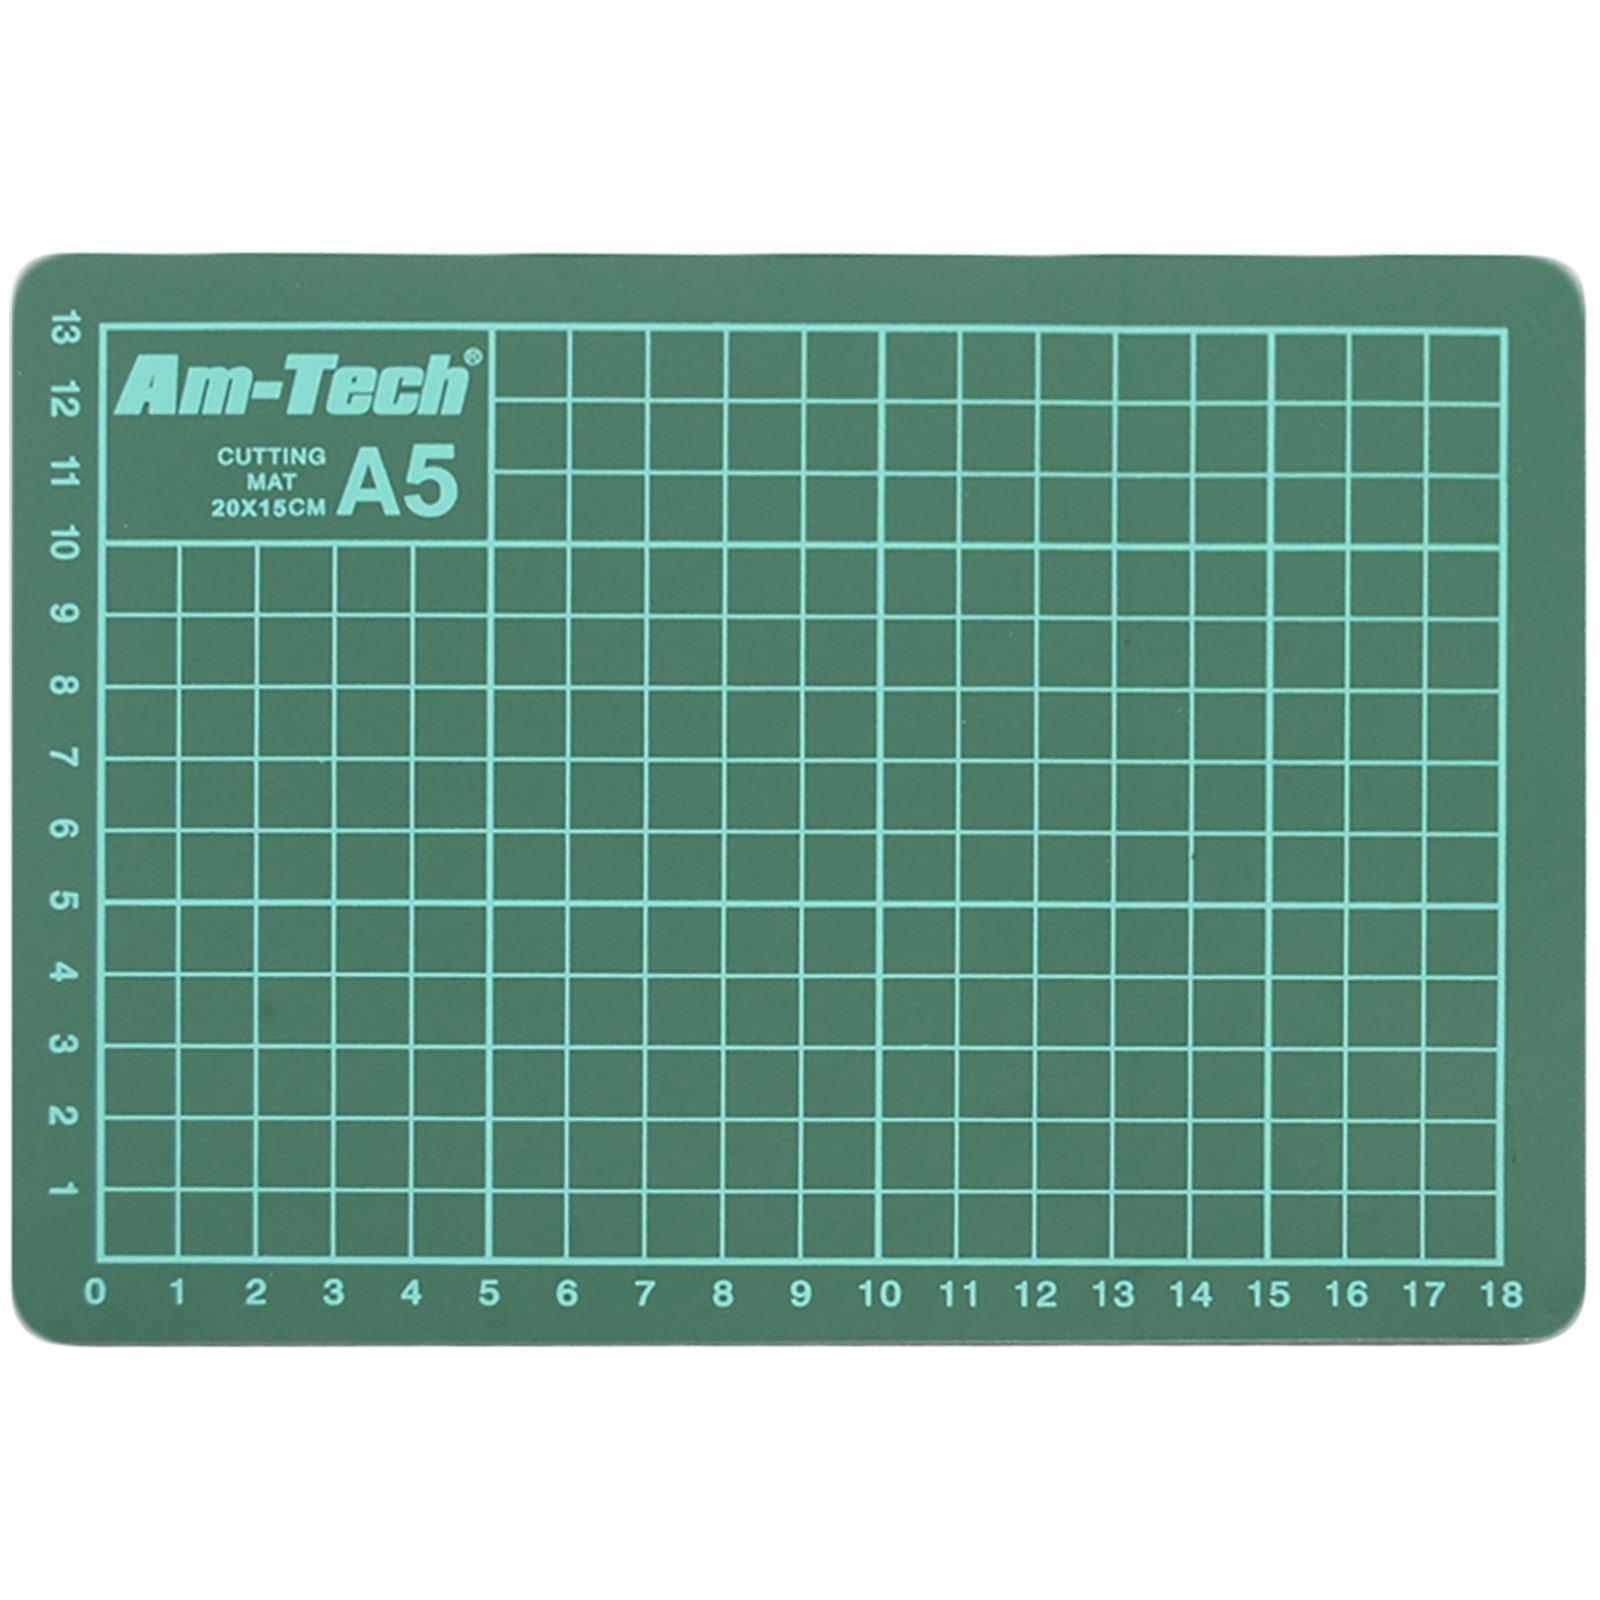 Amtech A5 Cutting Mat with Marking Guides